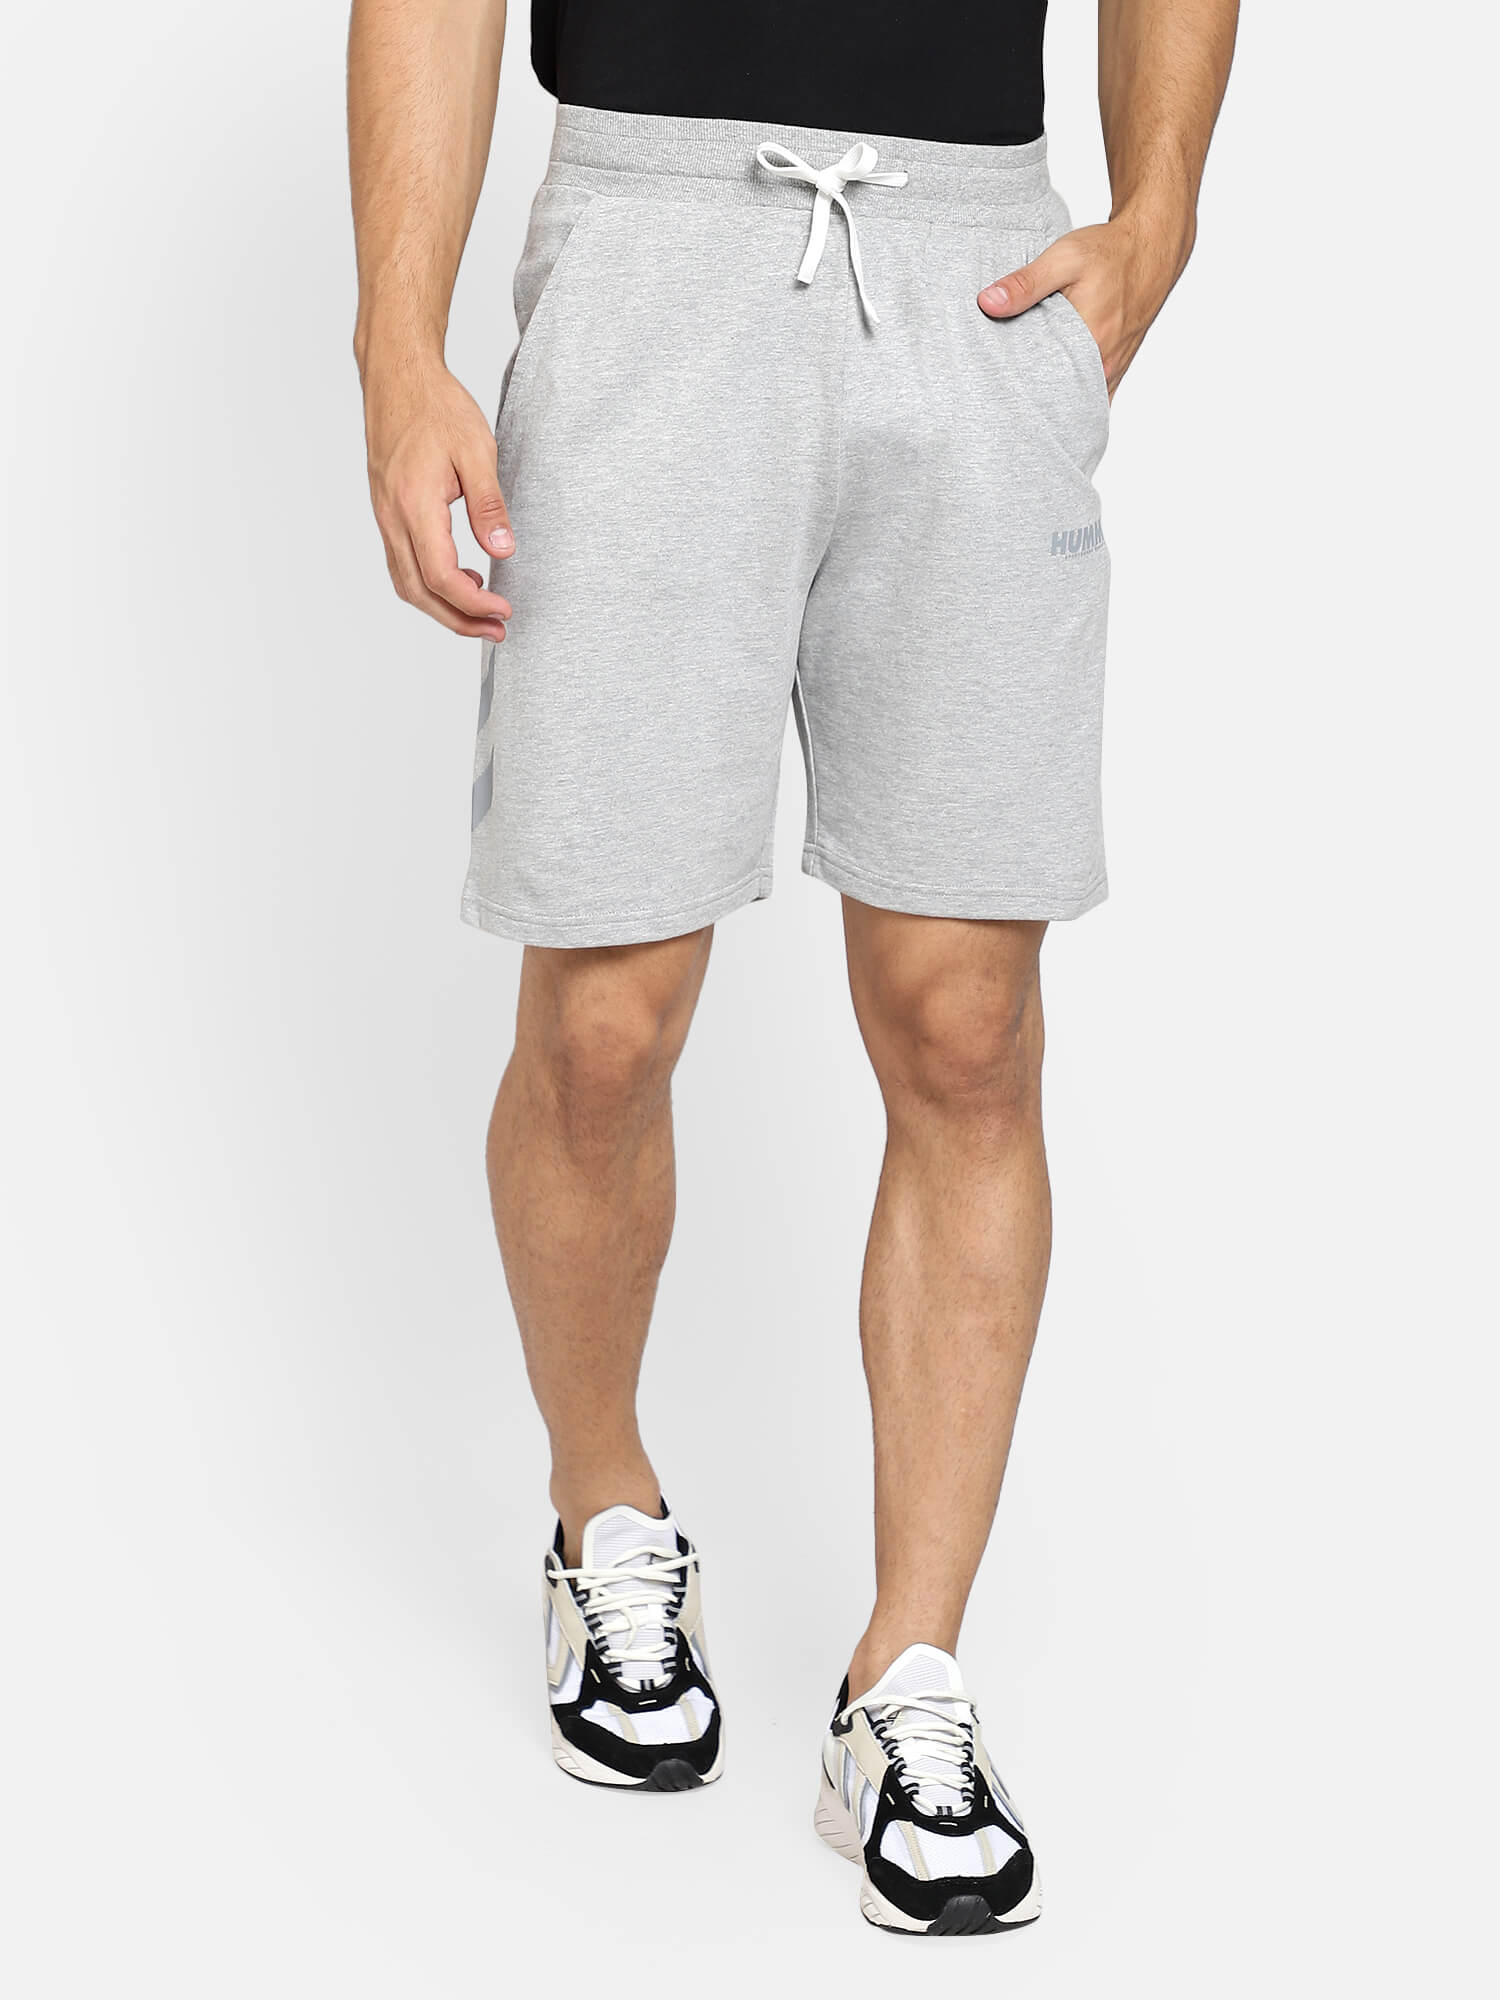 Chevs Grey Shorts for Men